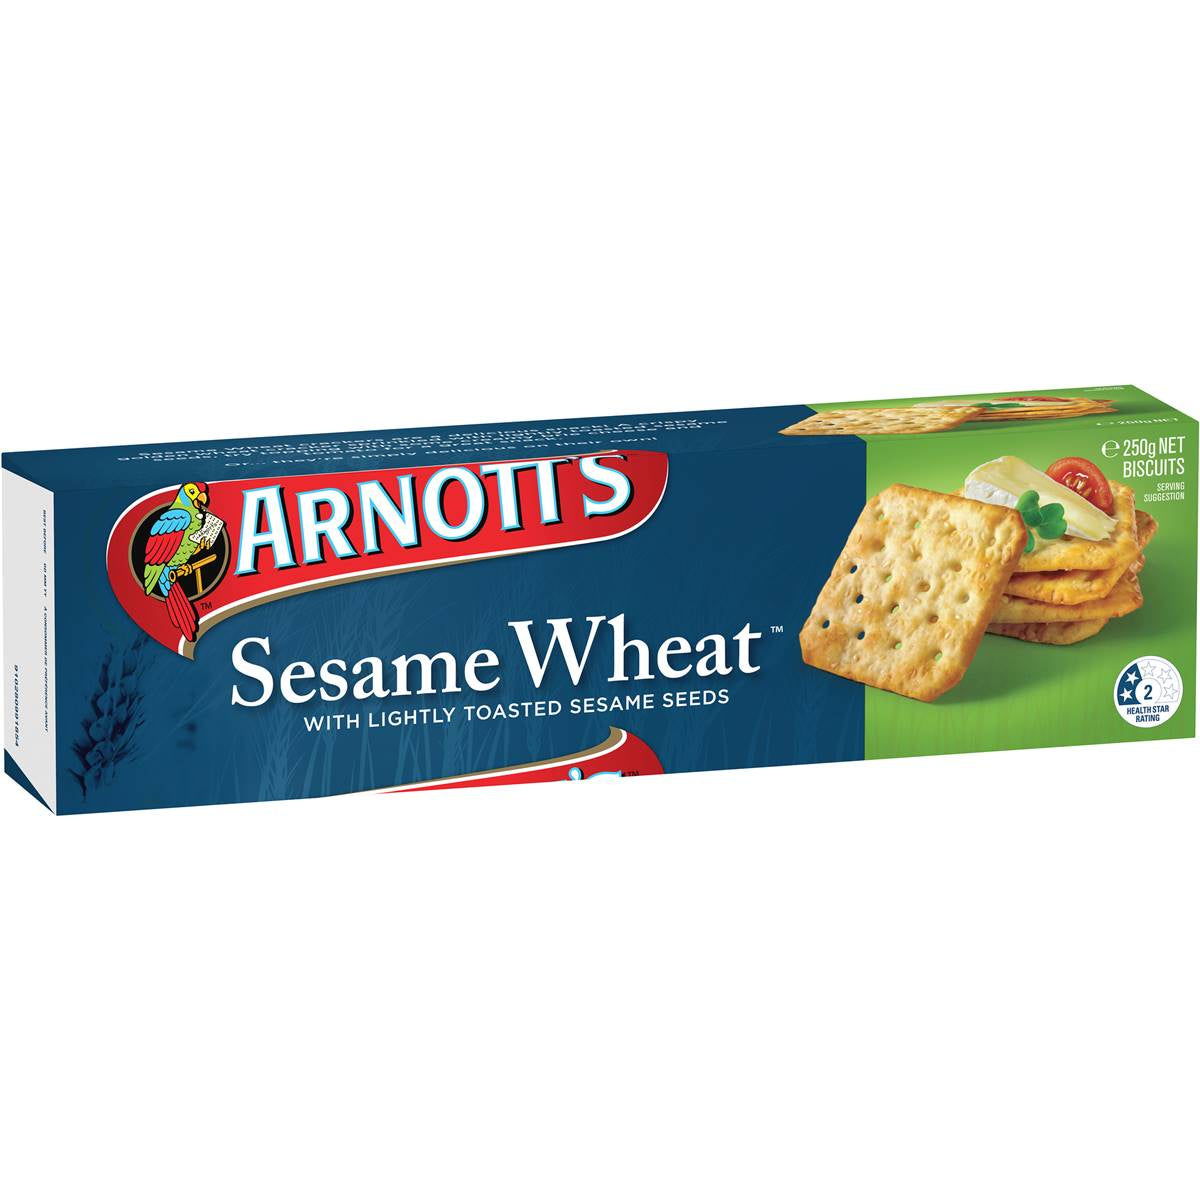 Arnotts Sesame Wheat Crackers 250G